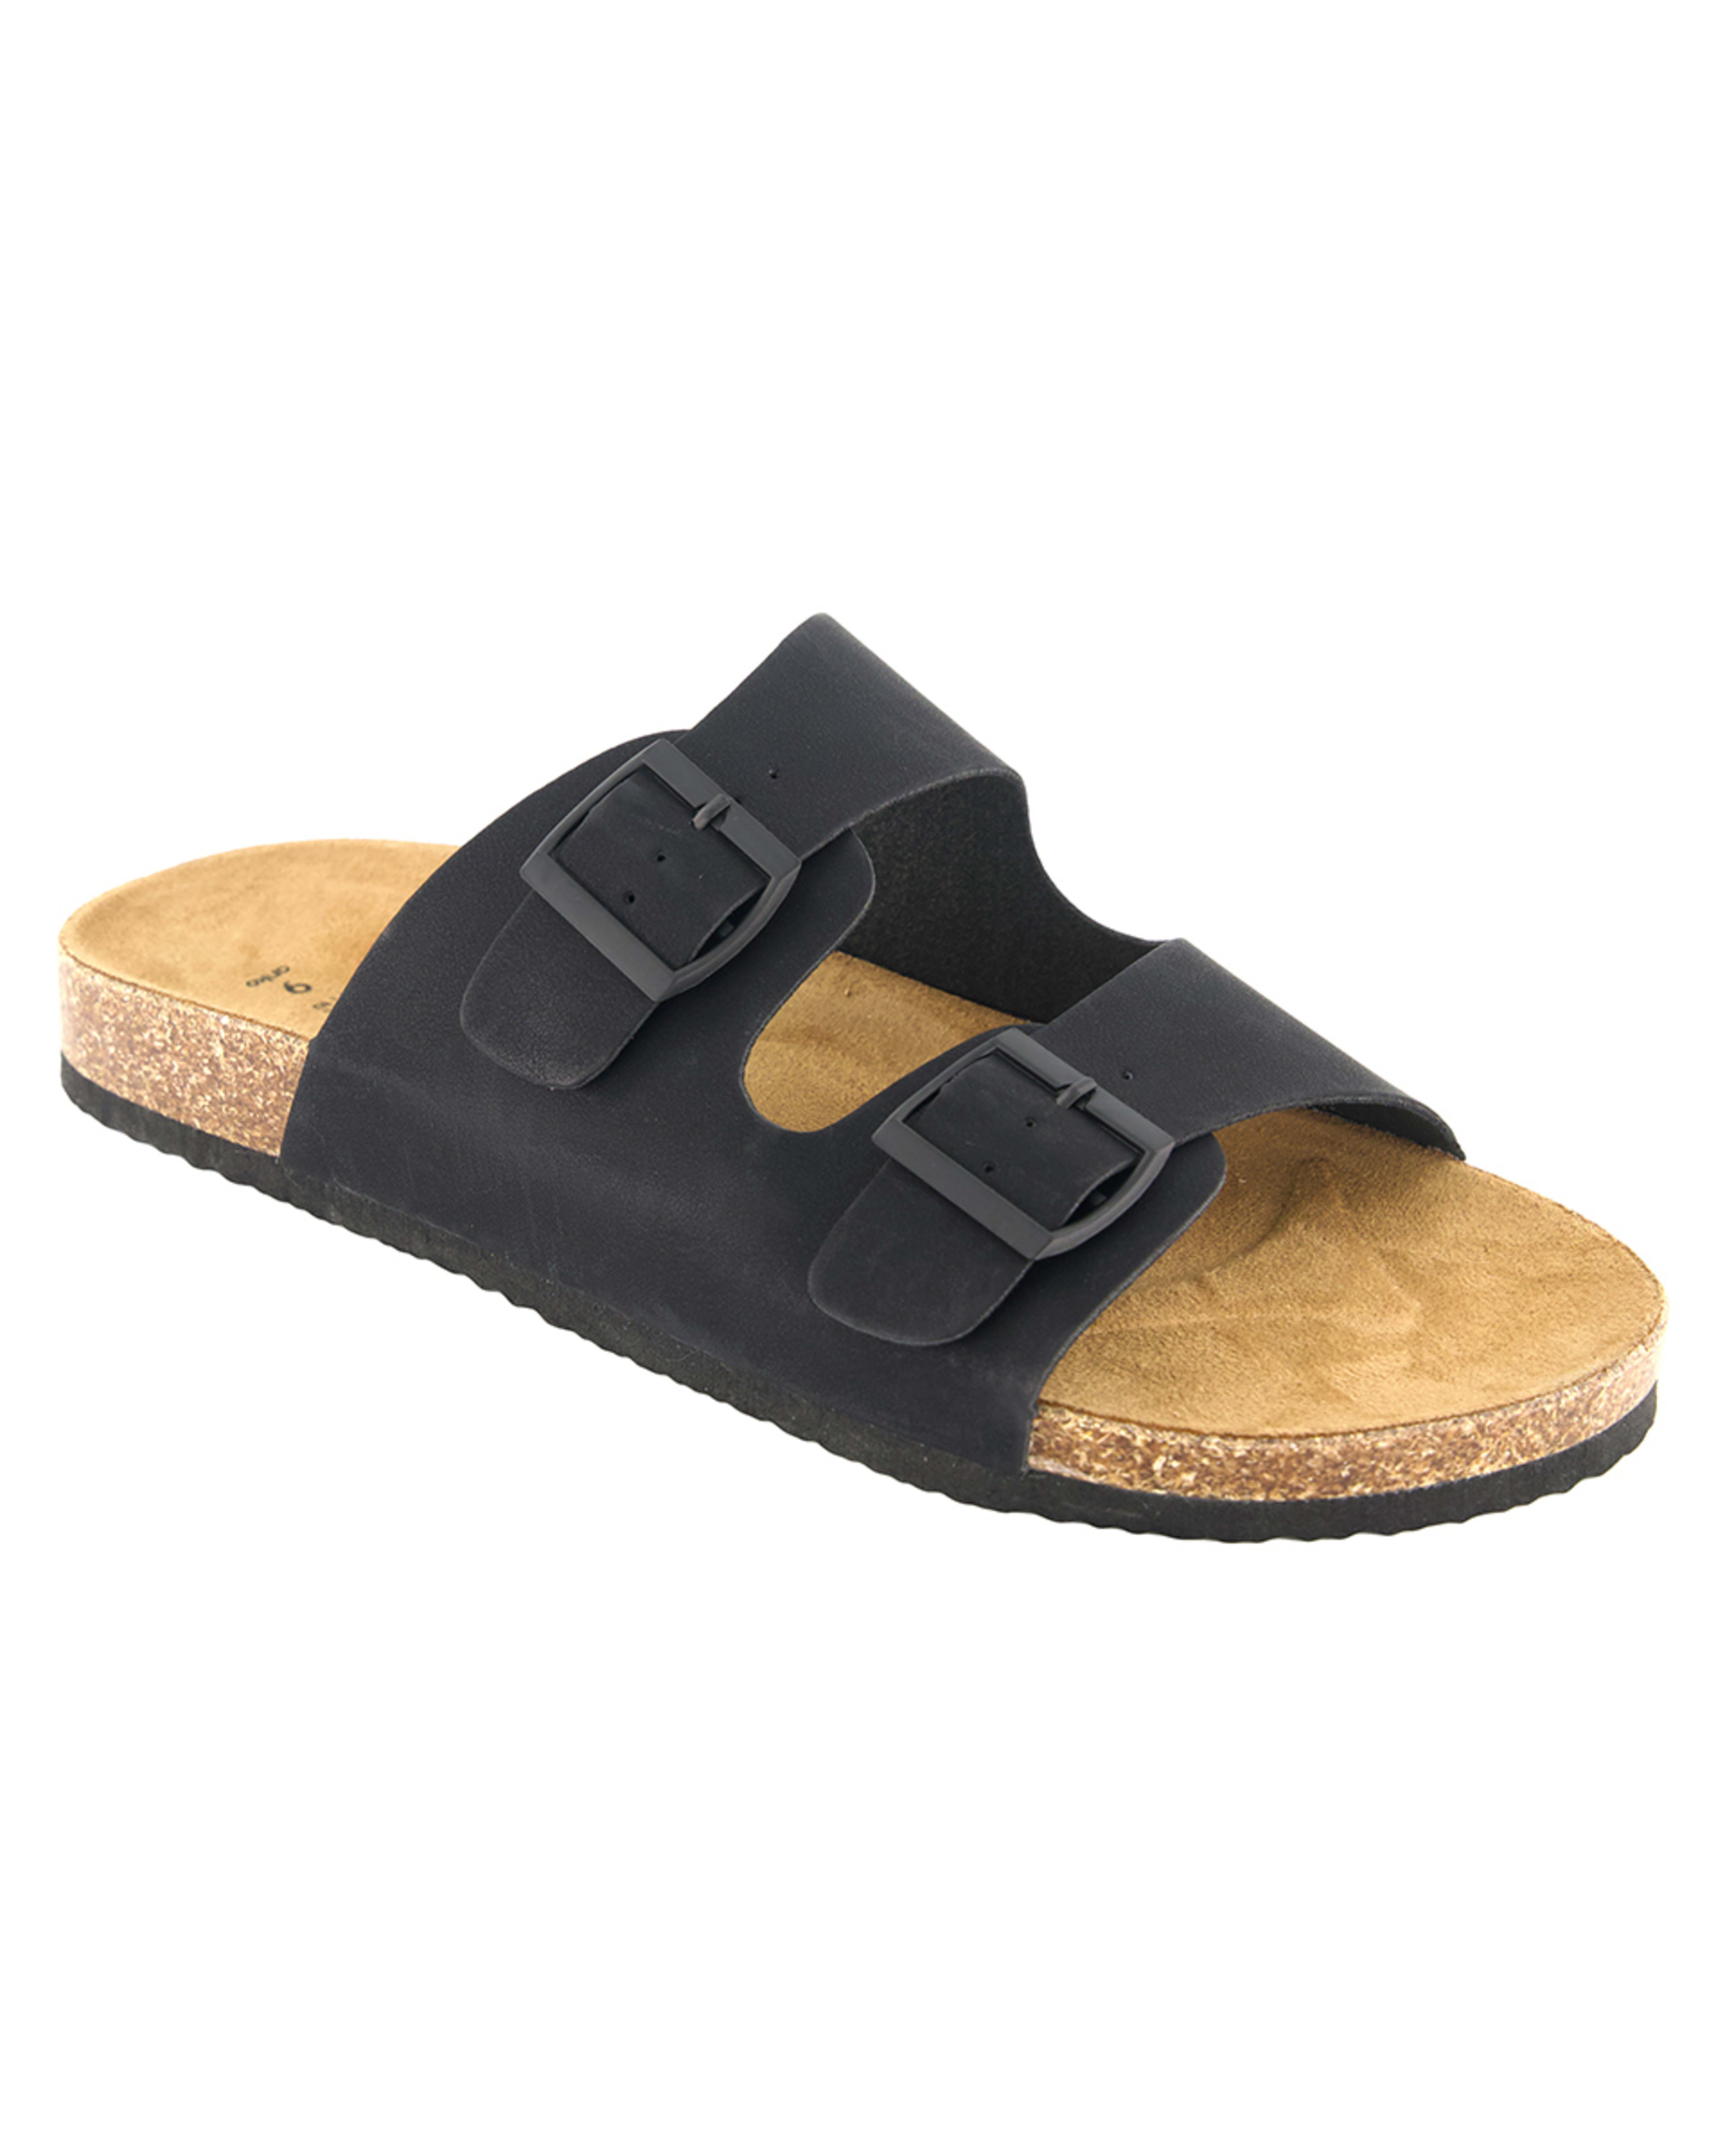 Double Buckle Sandals - Kmart